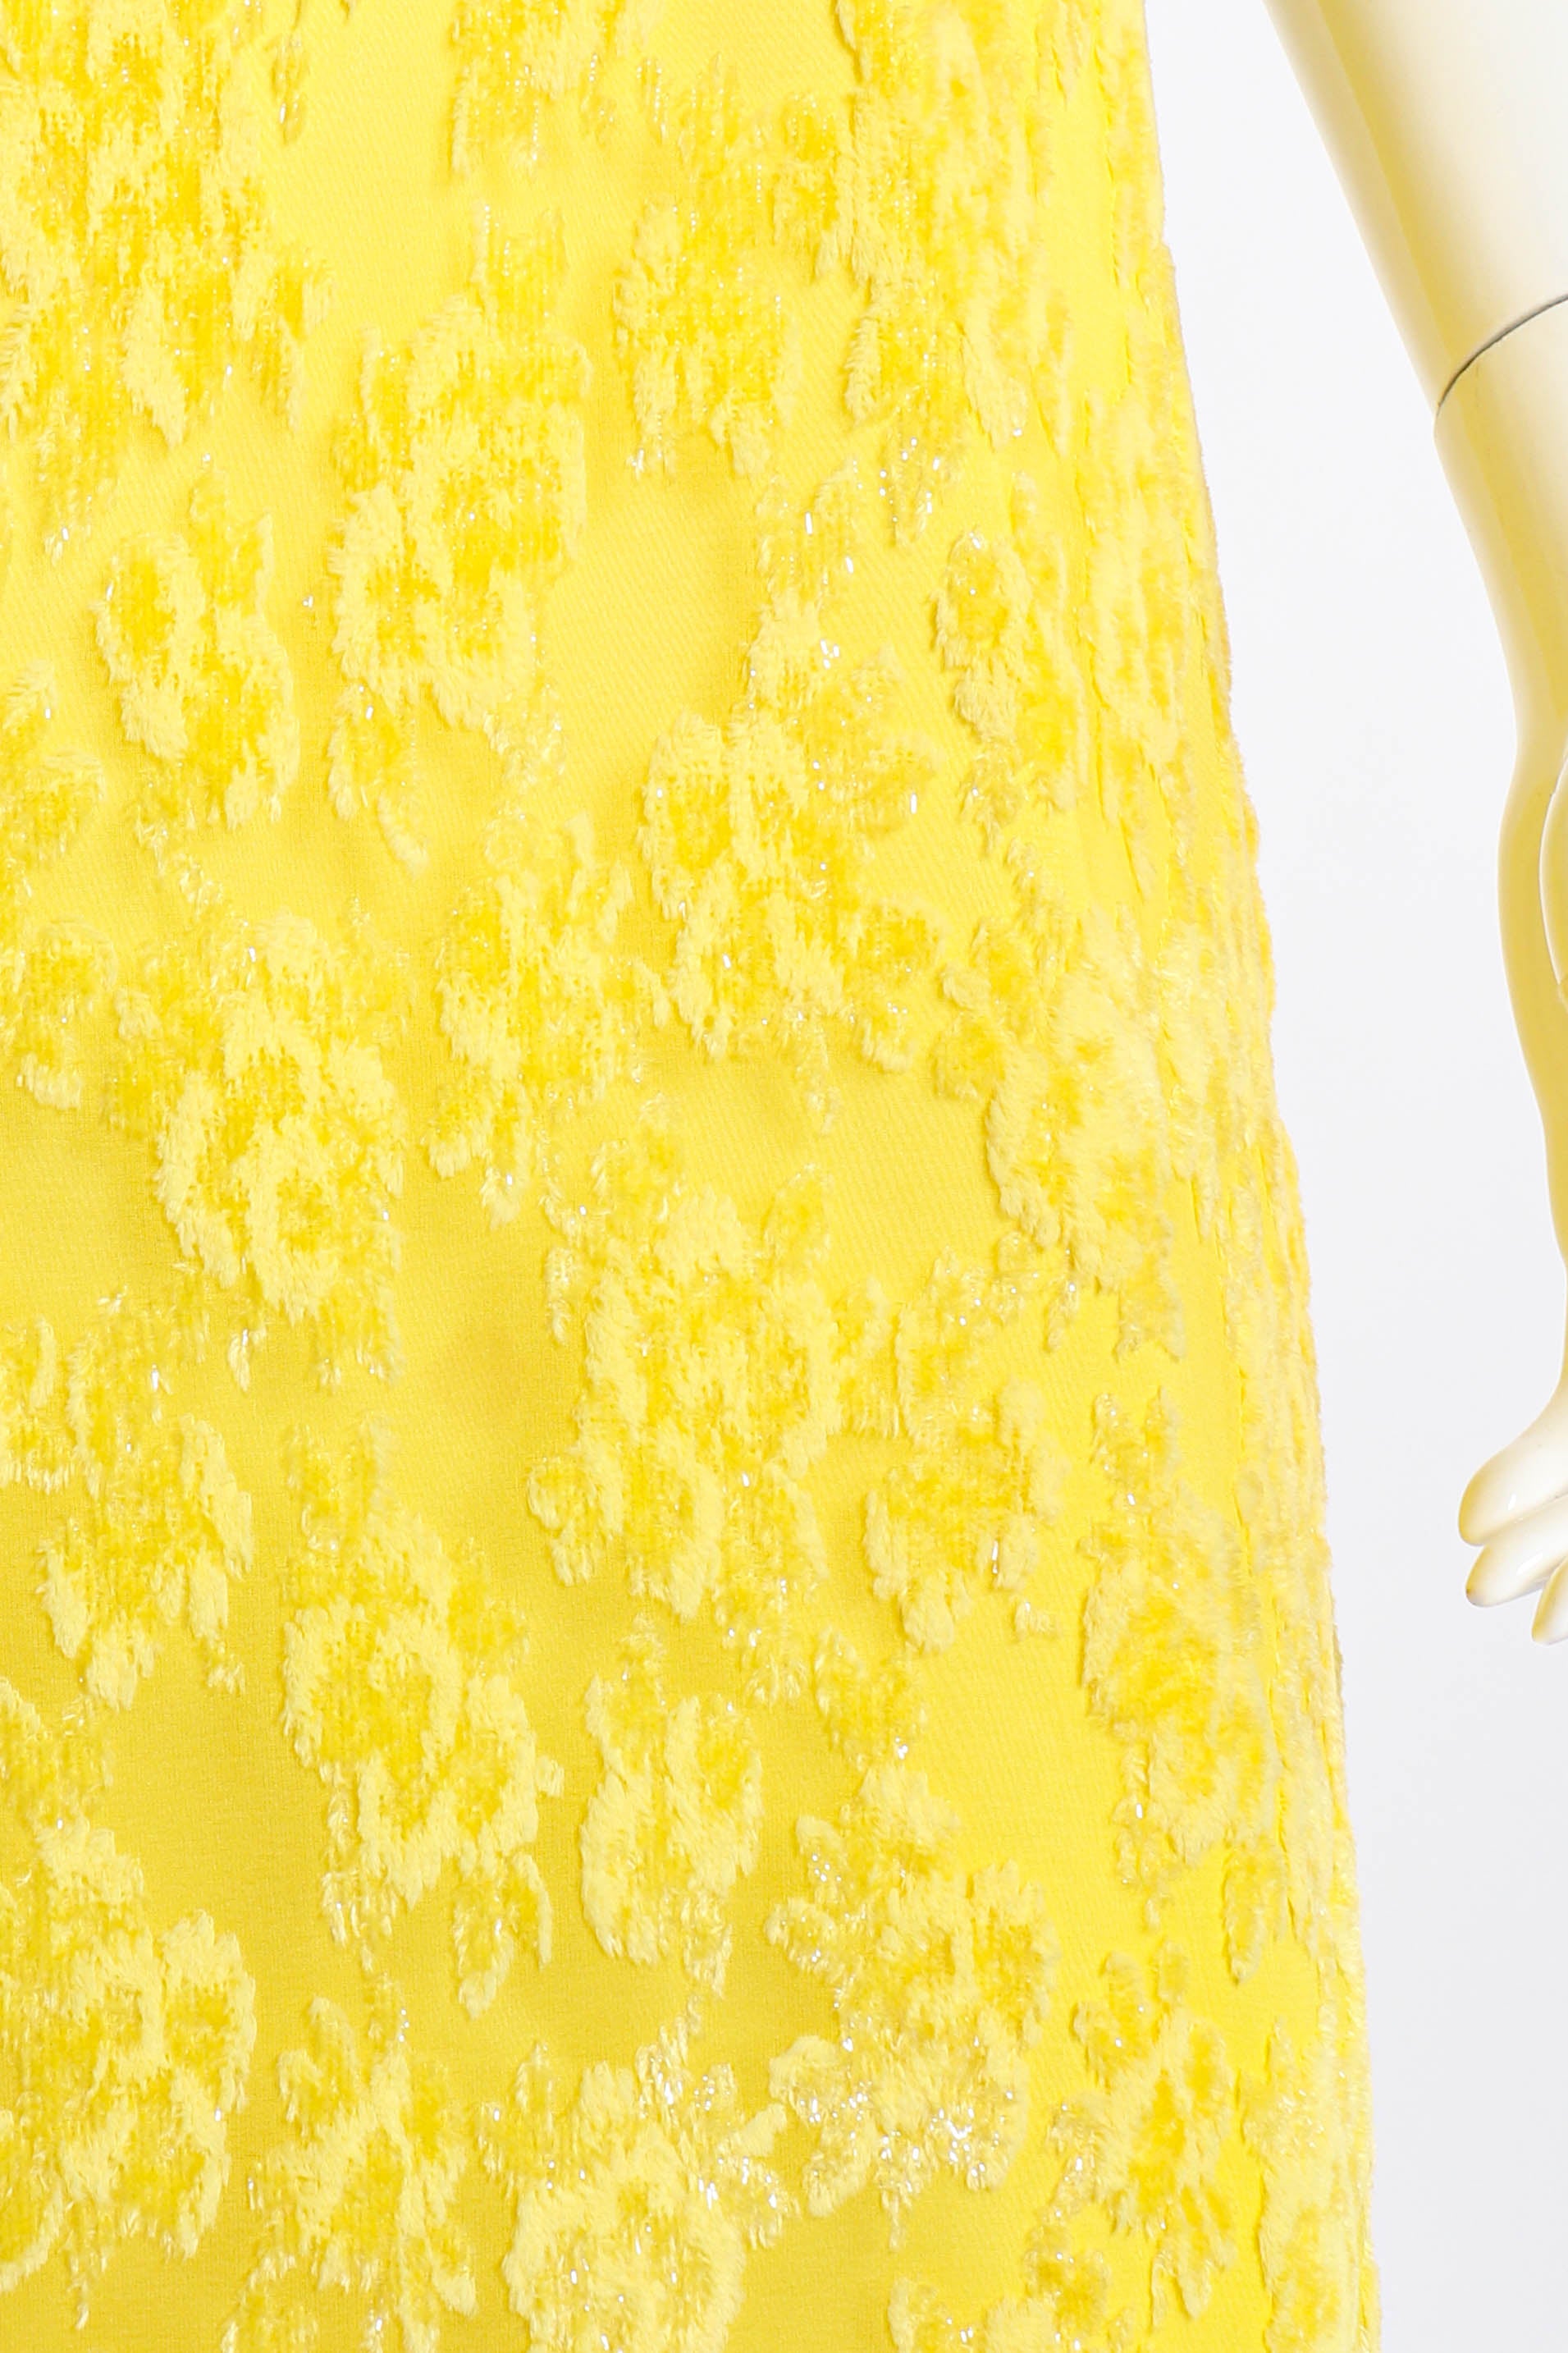 Vintage Bernetti Beaded Floral Burnout Gown stain closeup on mannequin @recess la